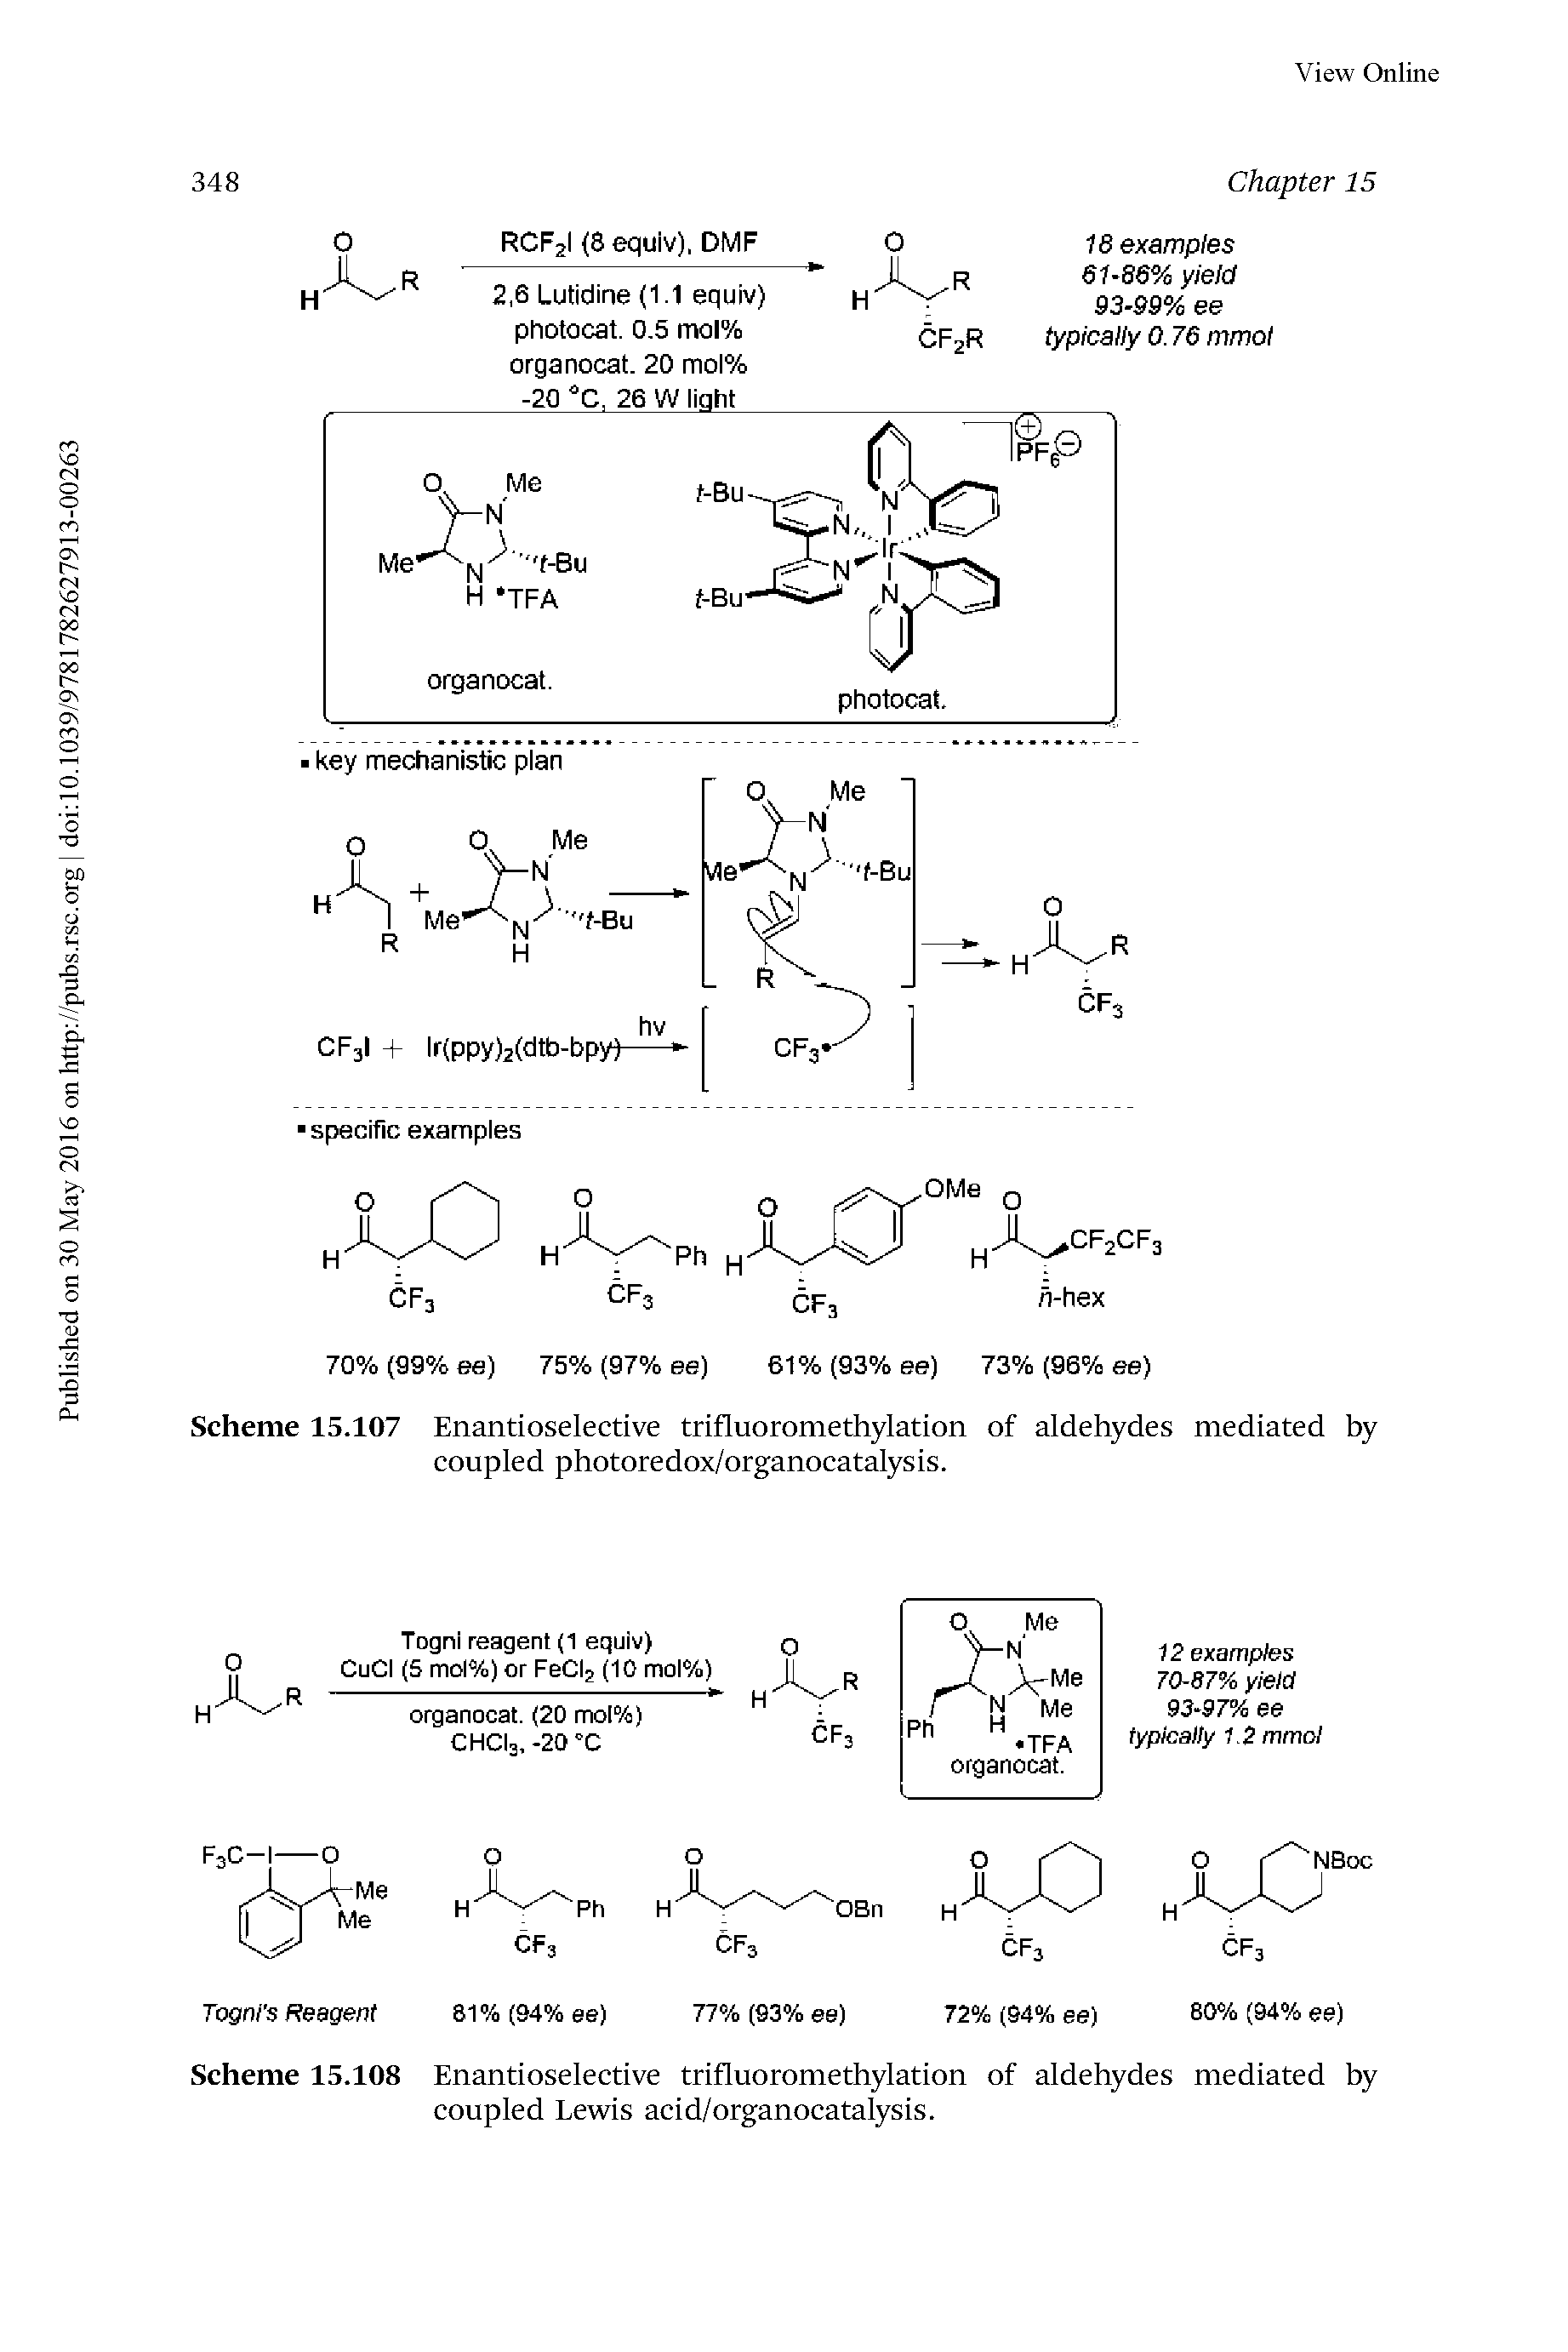 Scheme 15.107 Enantioselective trifluoromethylation of aldehydes mediated by coupled photoredox/organocatalysis.